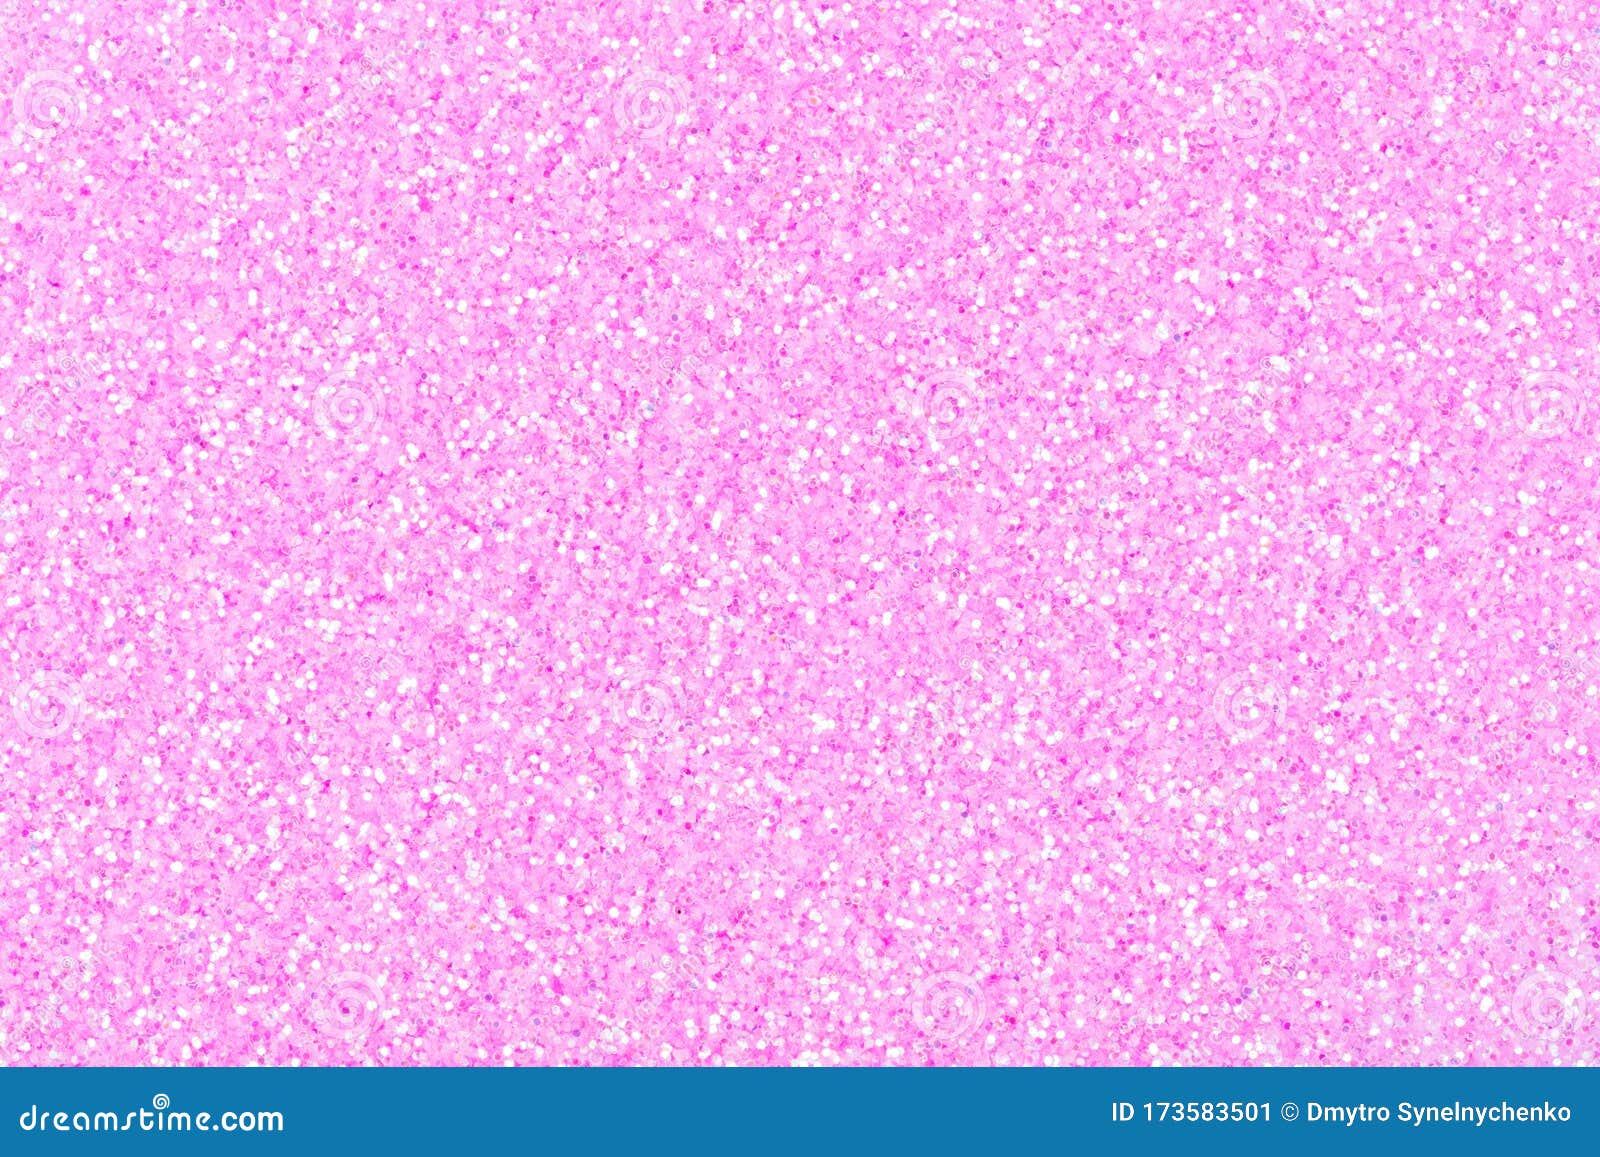 Pink Glitter Wallpaper Images  Free Download on Freepik